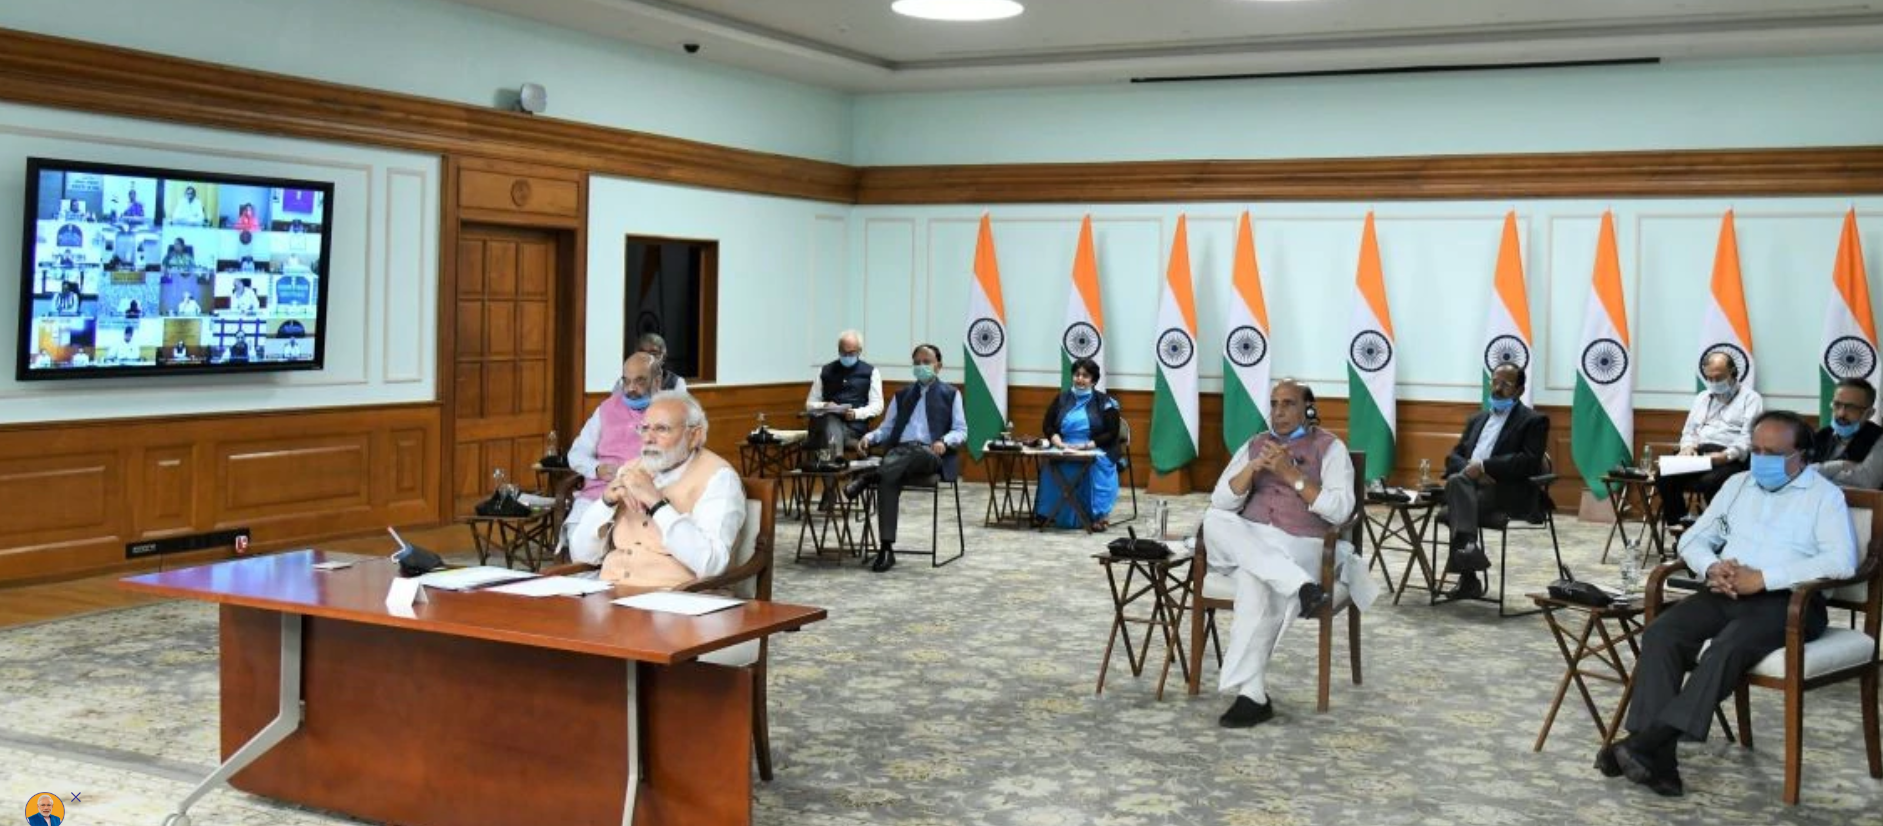 PM નરેન્દ્ર મોદીએ વીડિયો કોન્ફરન્સ દ્વારા મંત્રીમંડળના સભ્યો સાથે બેઠક યોજી